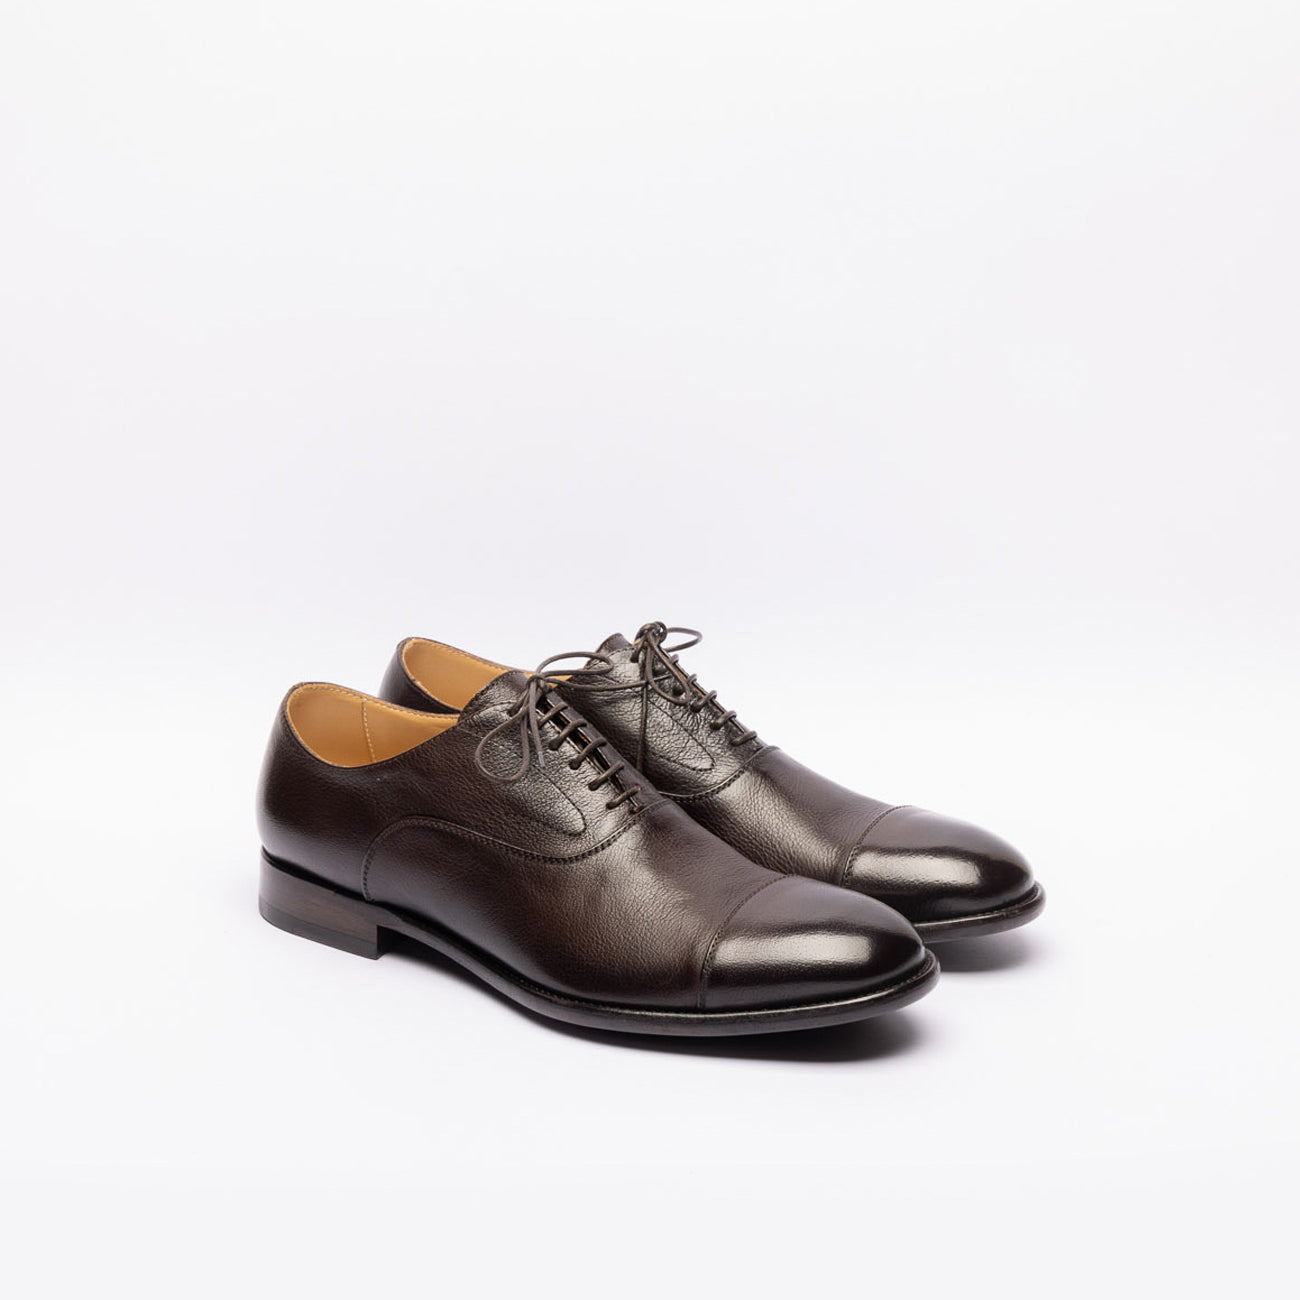 Fasciani Abel 59012 brown leather oxford shoe